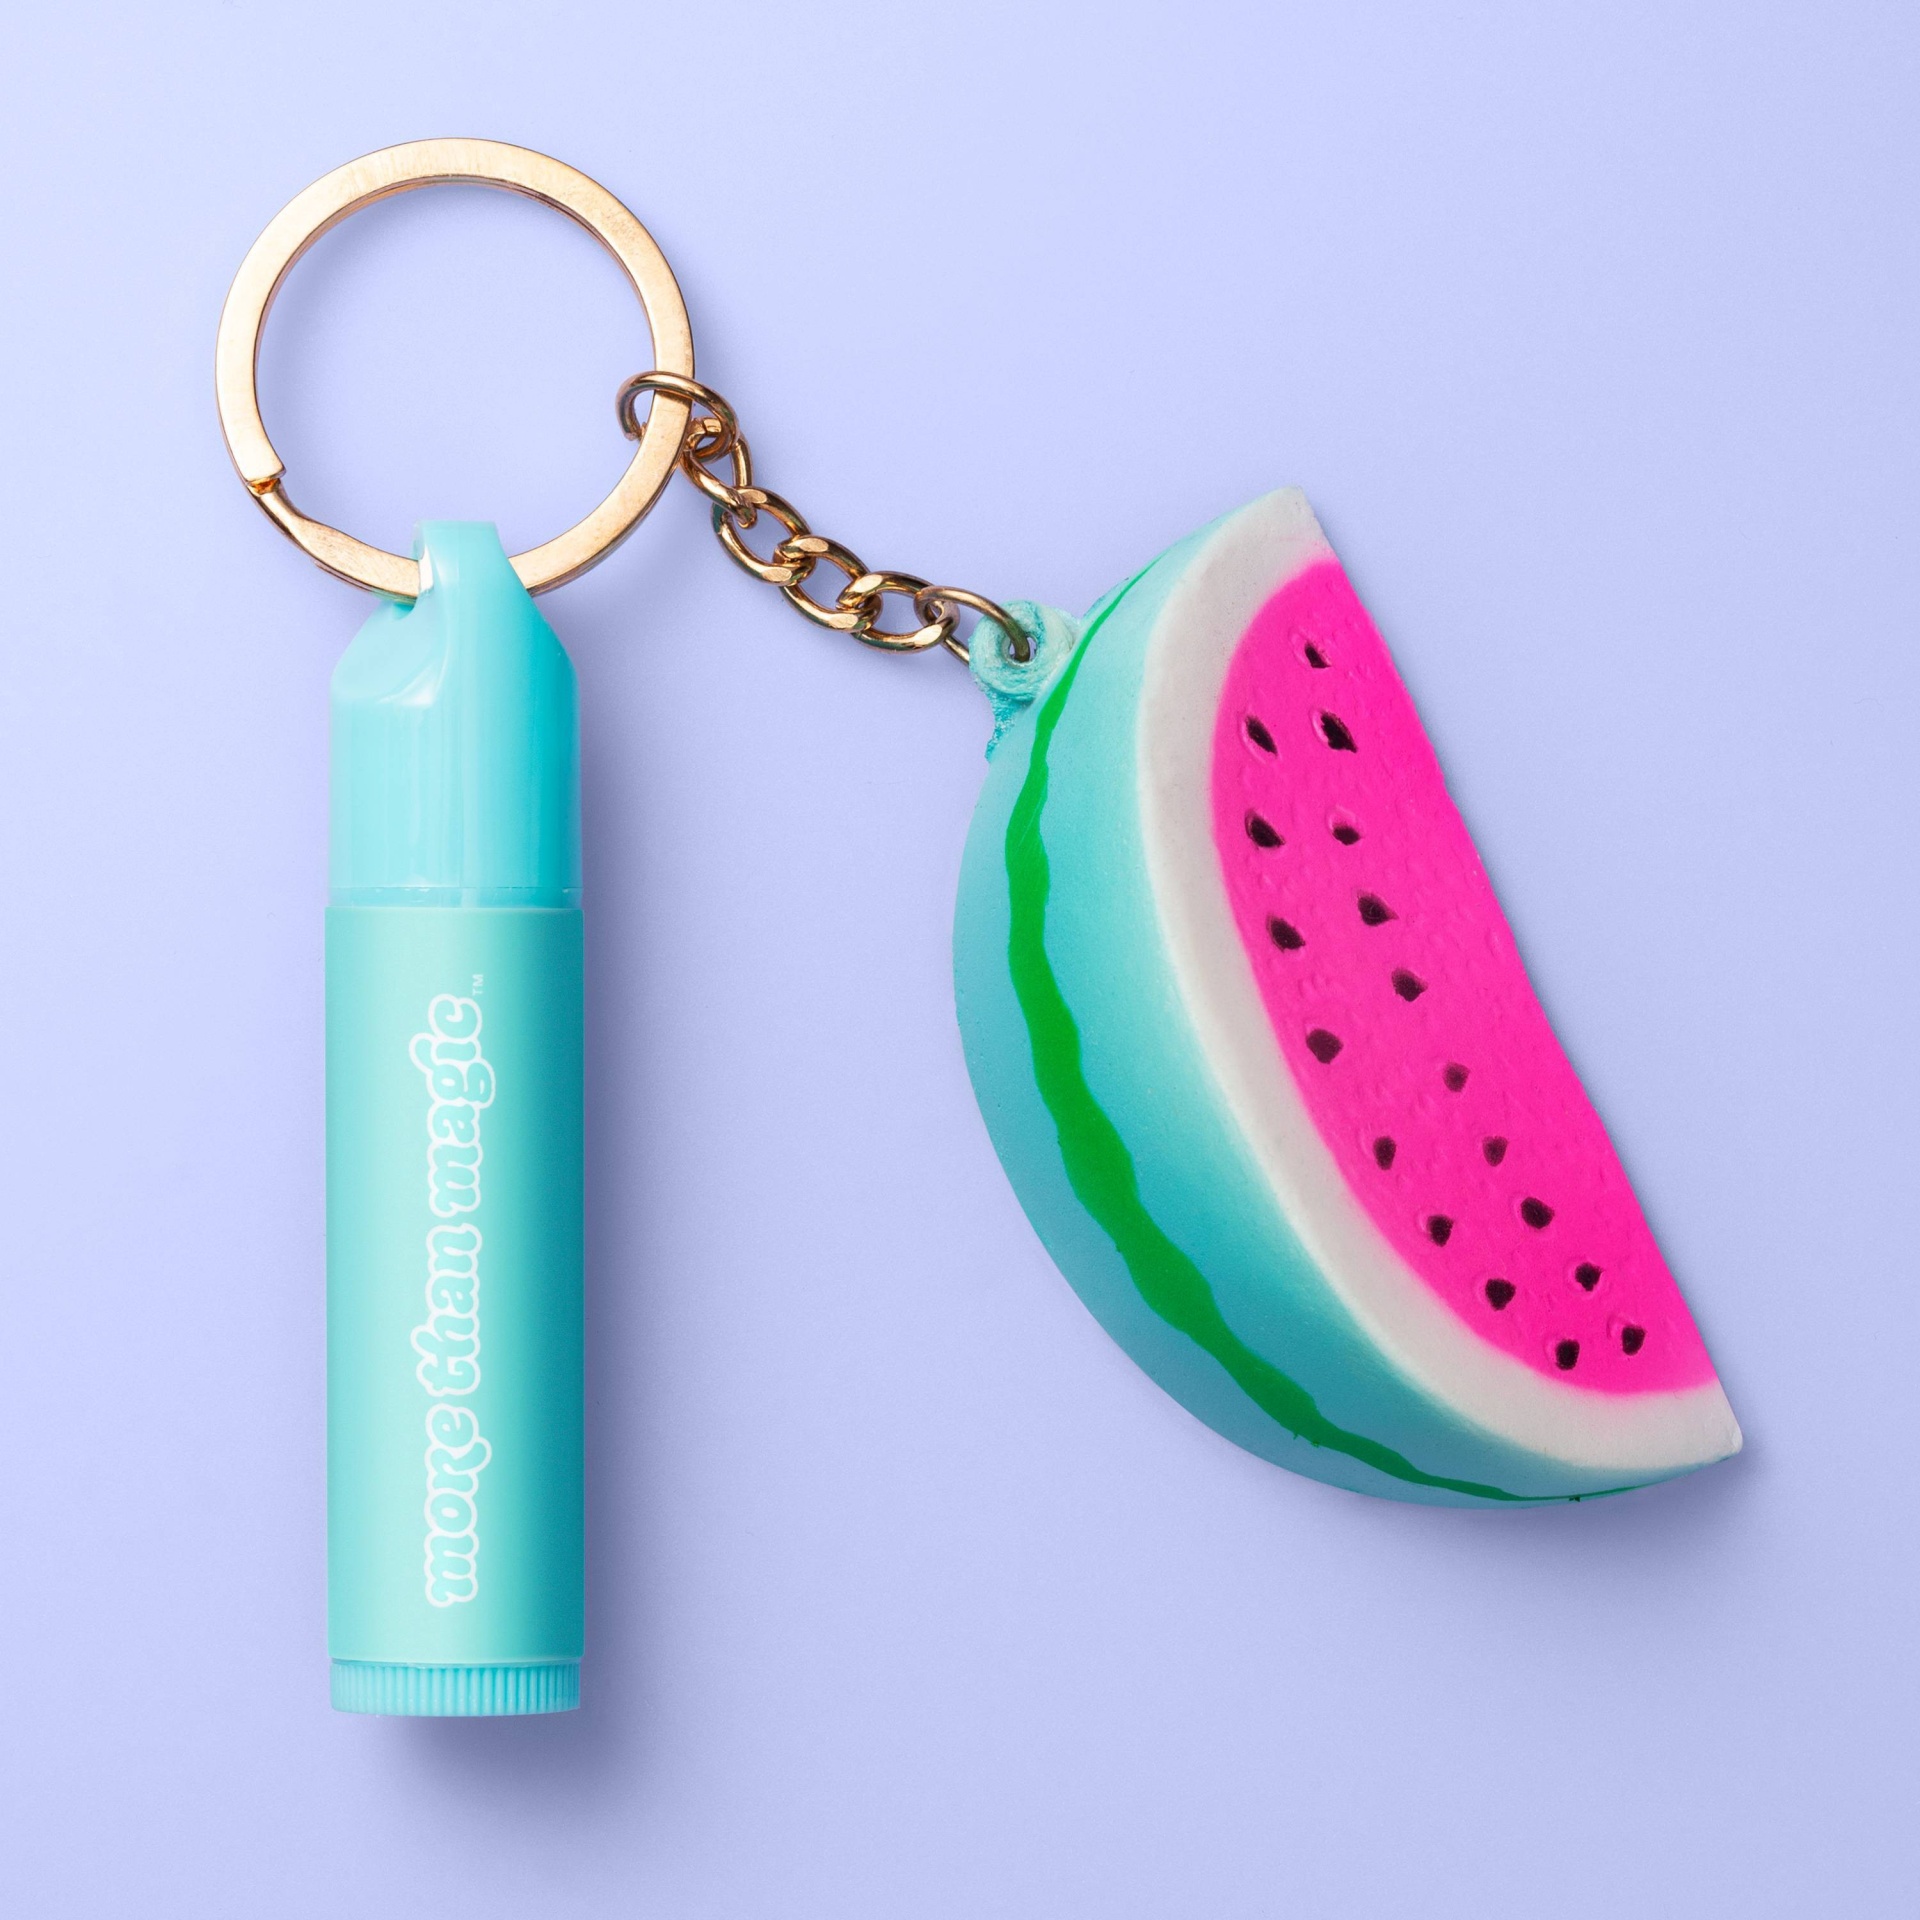  MU Kids Fruity Flavored Lip Balm with Keychain